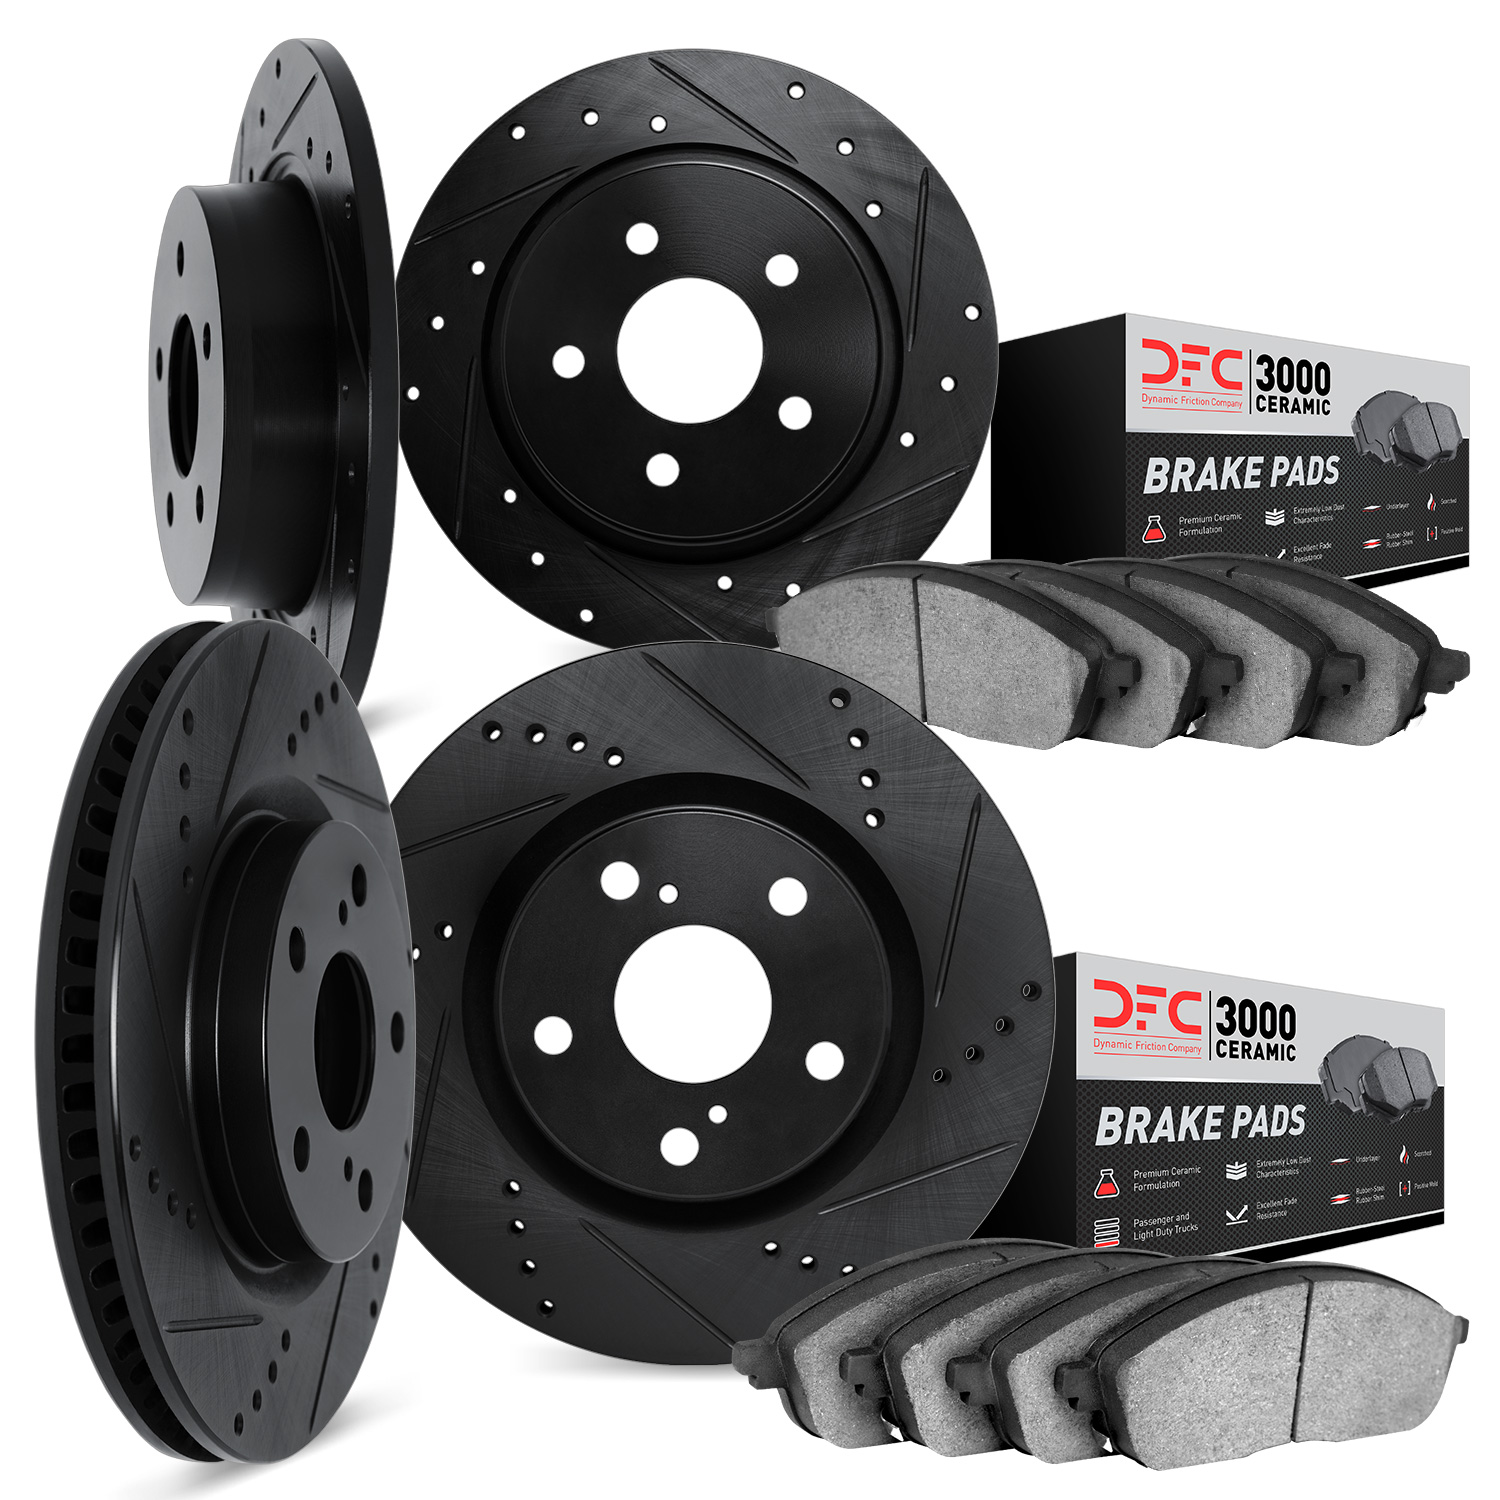 8304-54115 Drilled/Slotted Brake Rotors with 3000-Series Ceramic Brake Pads Kit [Black], 2014-2018 Ford/Lincoln/Mercury/Mazda, P